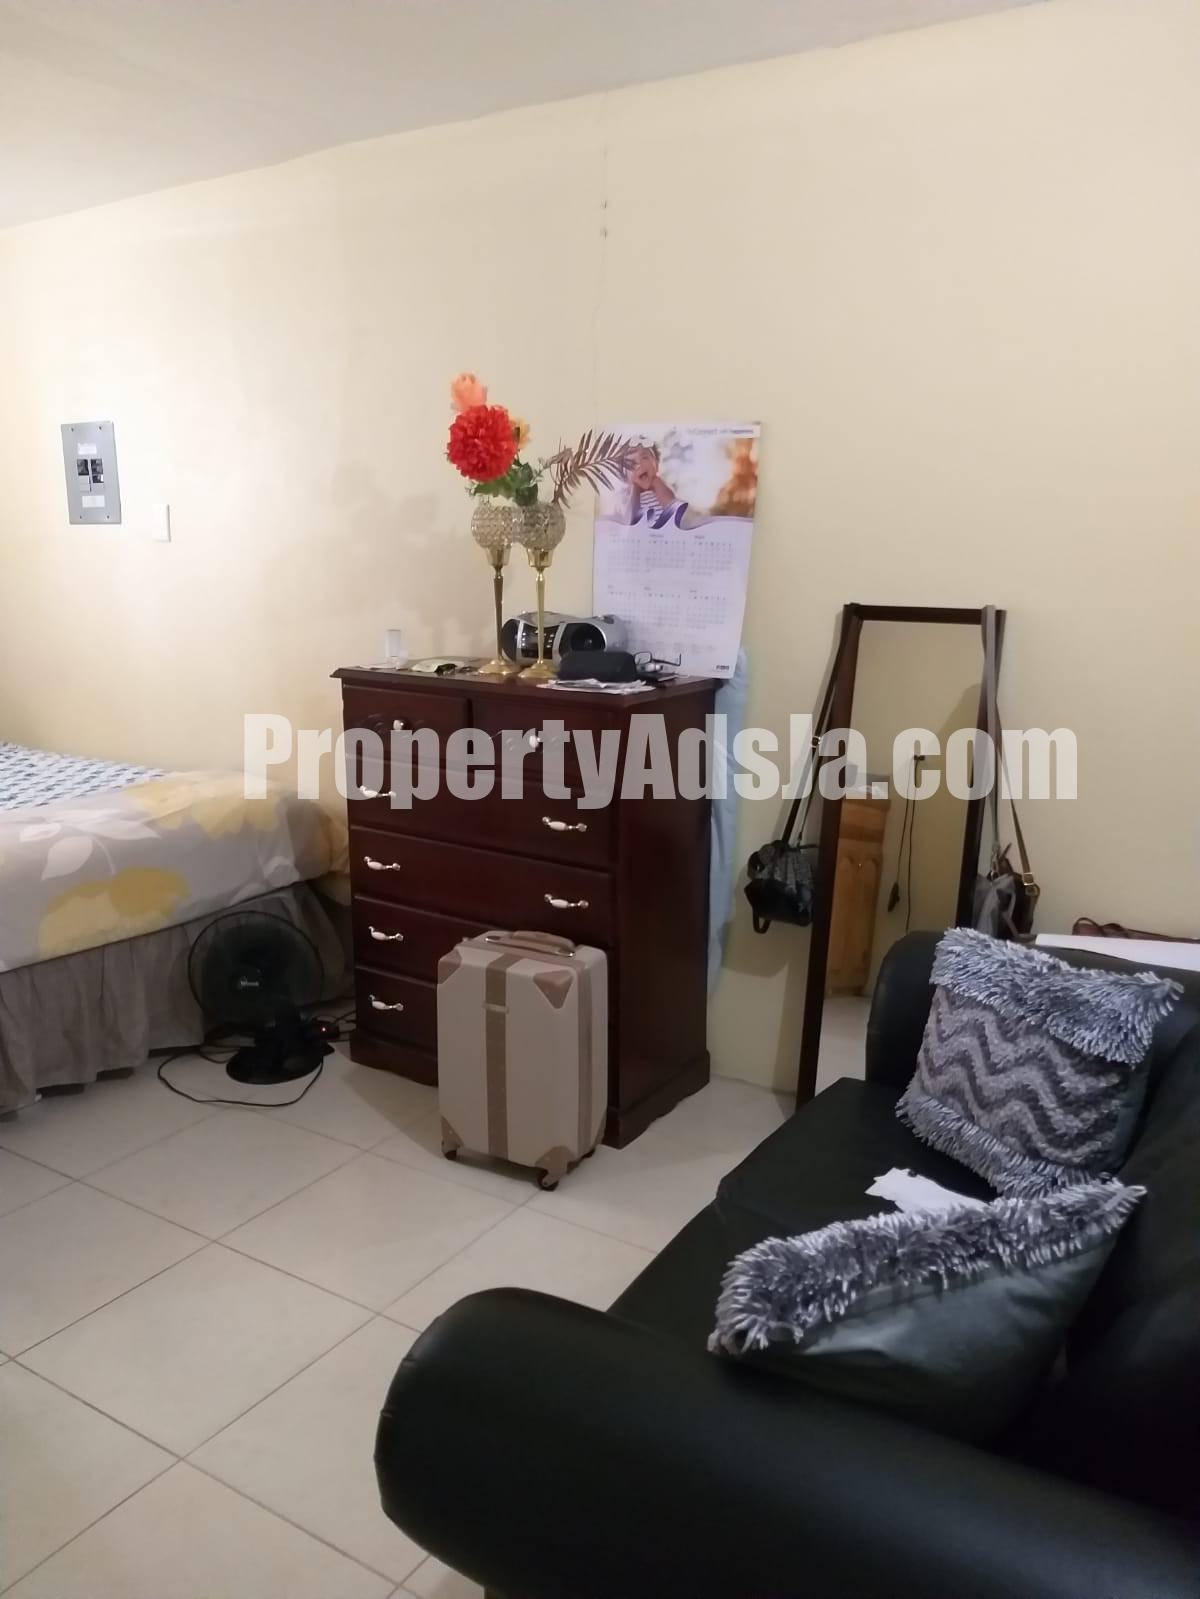 Apartment For Rent In Mona Kgn Kingston St Andrew Jamaica Propertyadsja Com